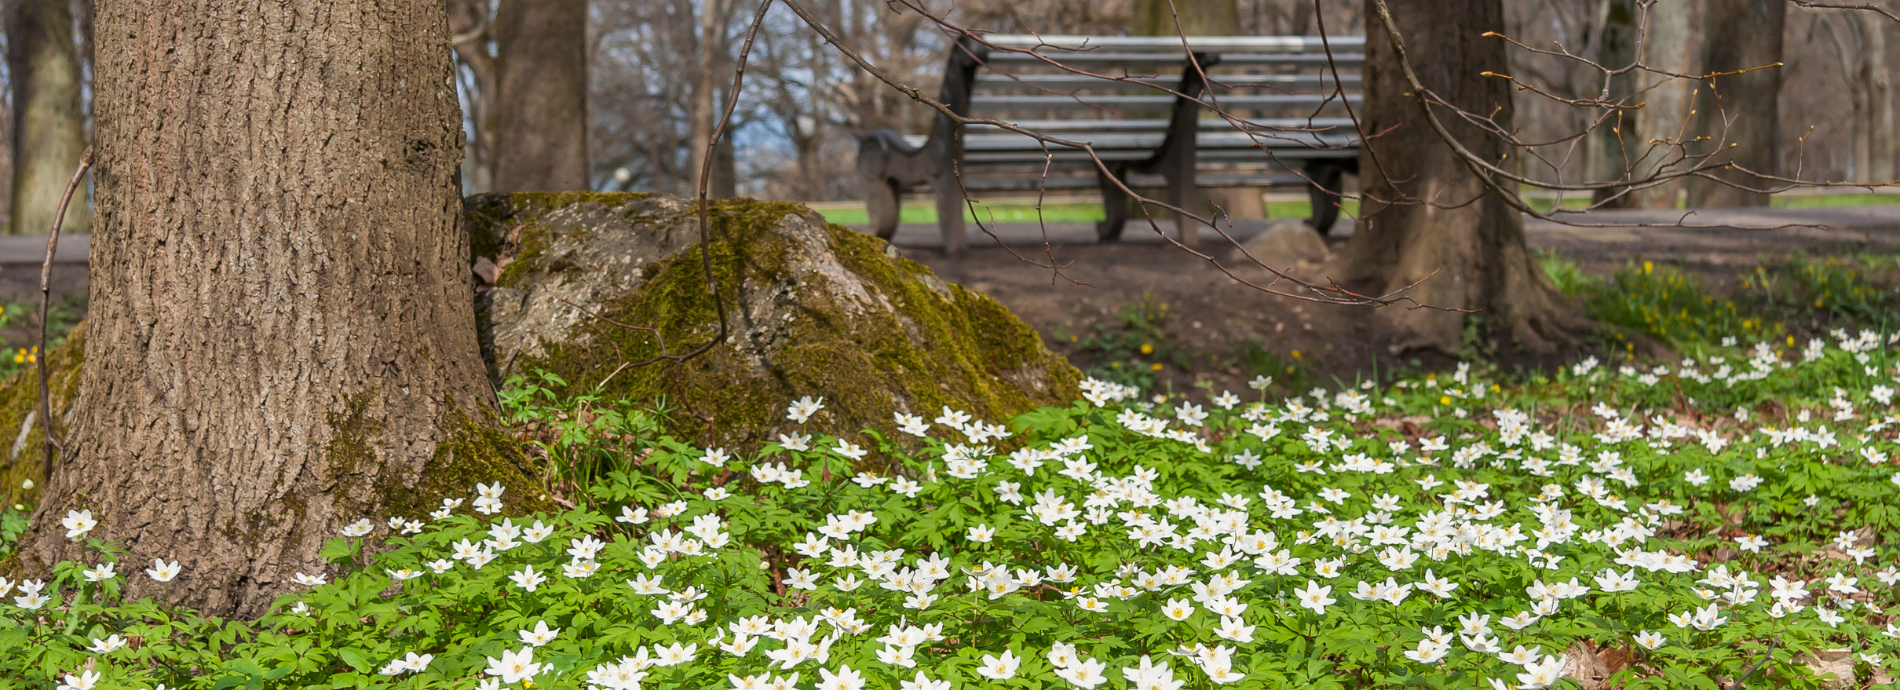 park bench in spring